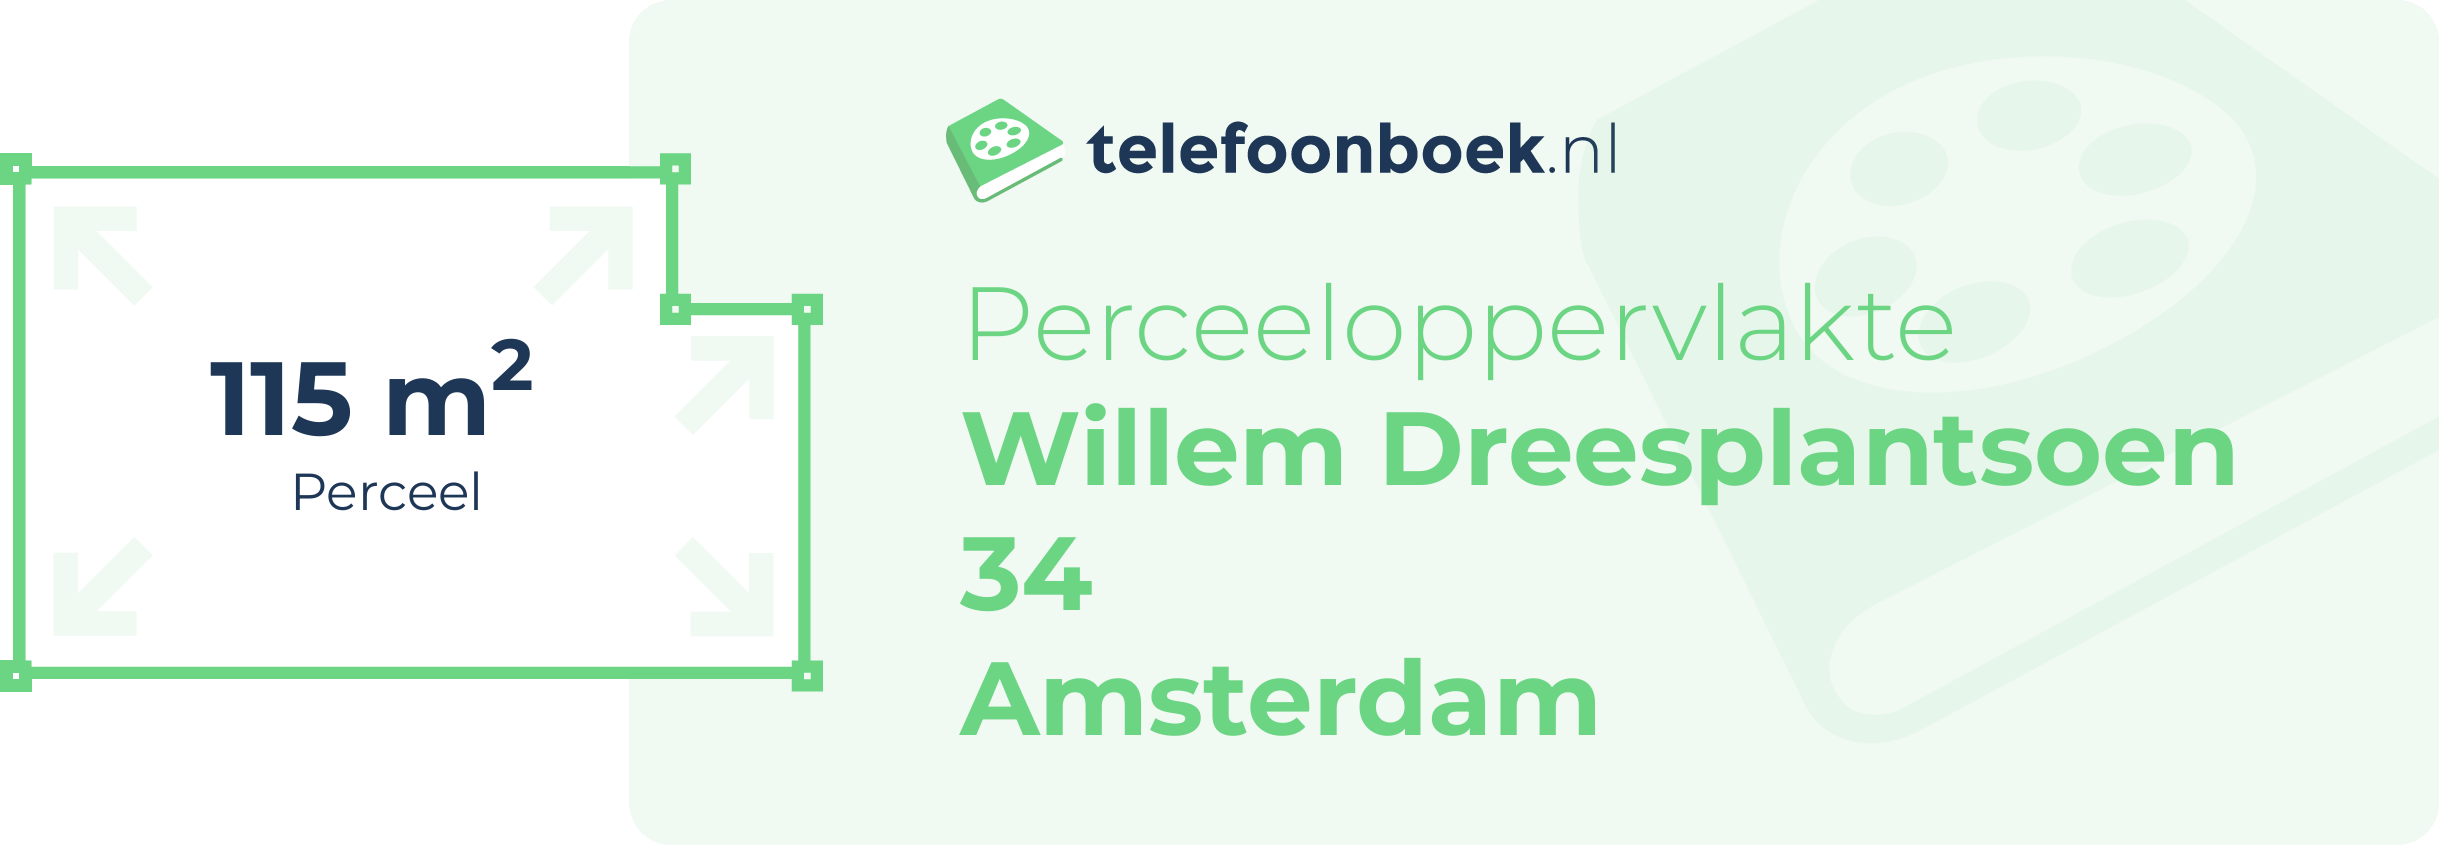 Perceeloppervlakte Willem Dreesplantsoen 34 Amsterdam